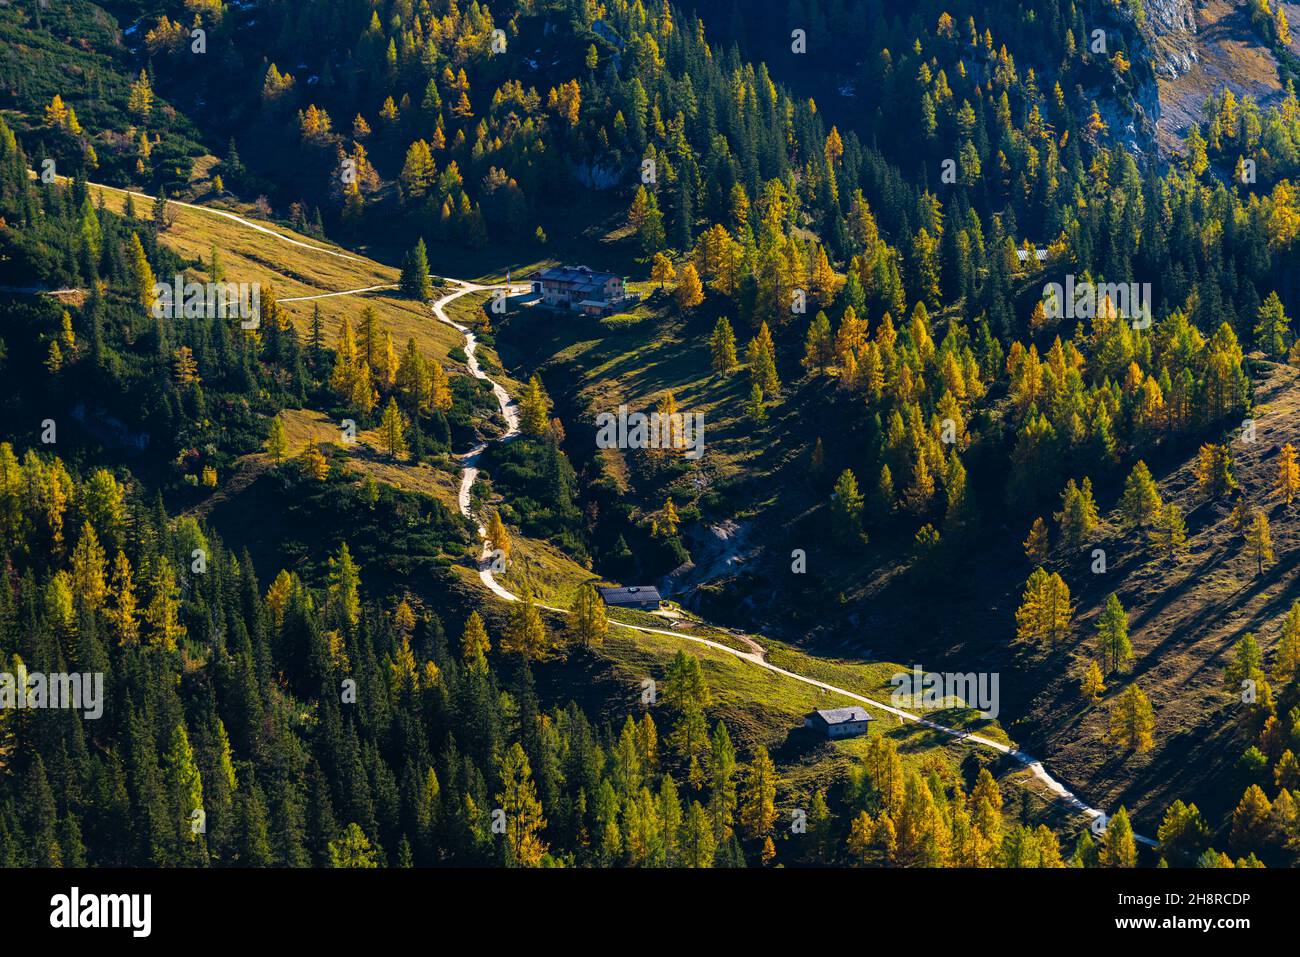 Ammira Berchtesgaden e le valli da Jenner Alm sul monte Jenner a circa 1800m s.l.m. nelle Alpi bavaresi, alta Baviera, Germania meridionale Foto Stock